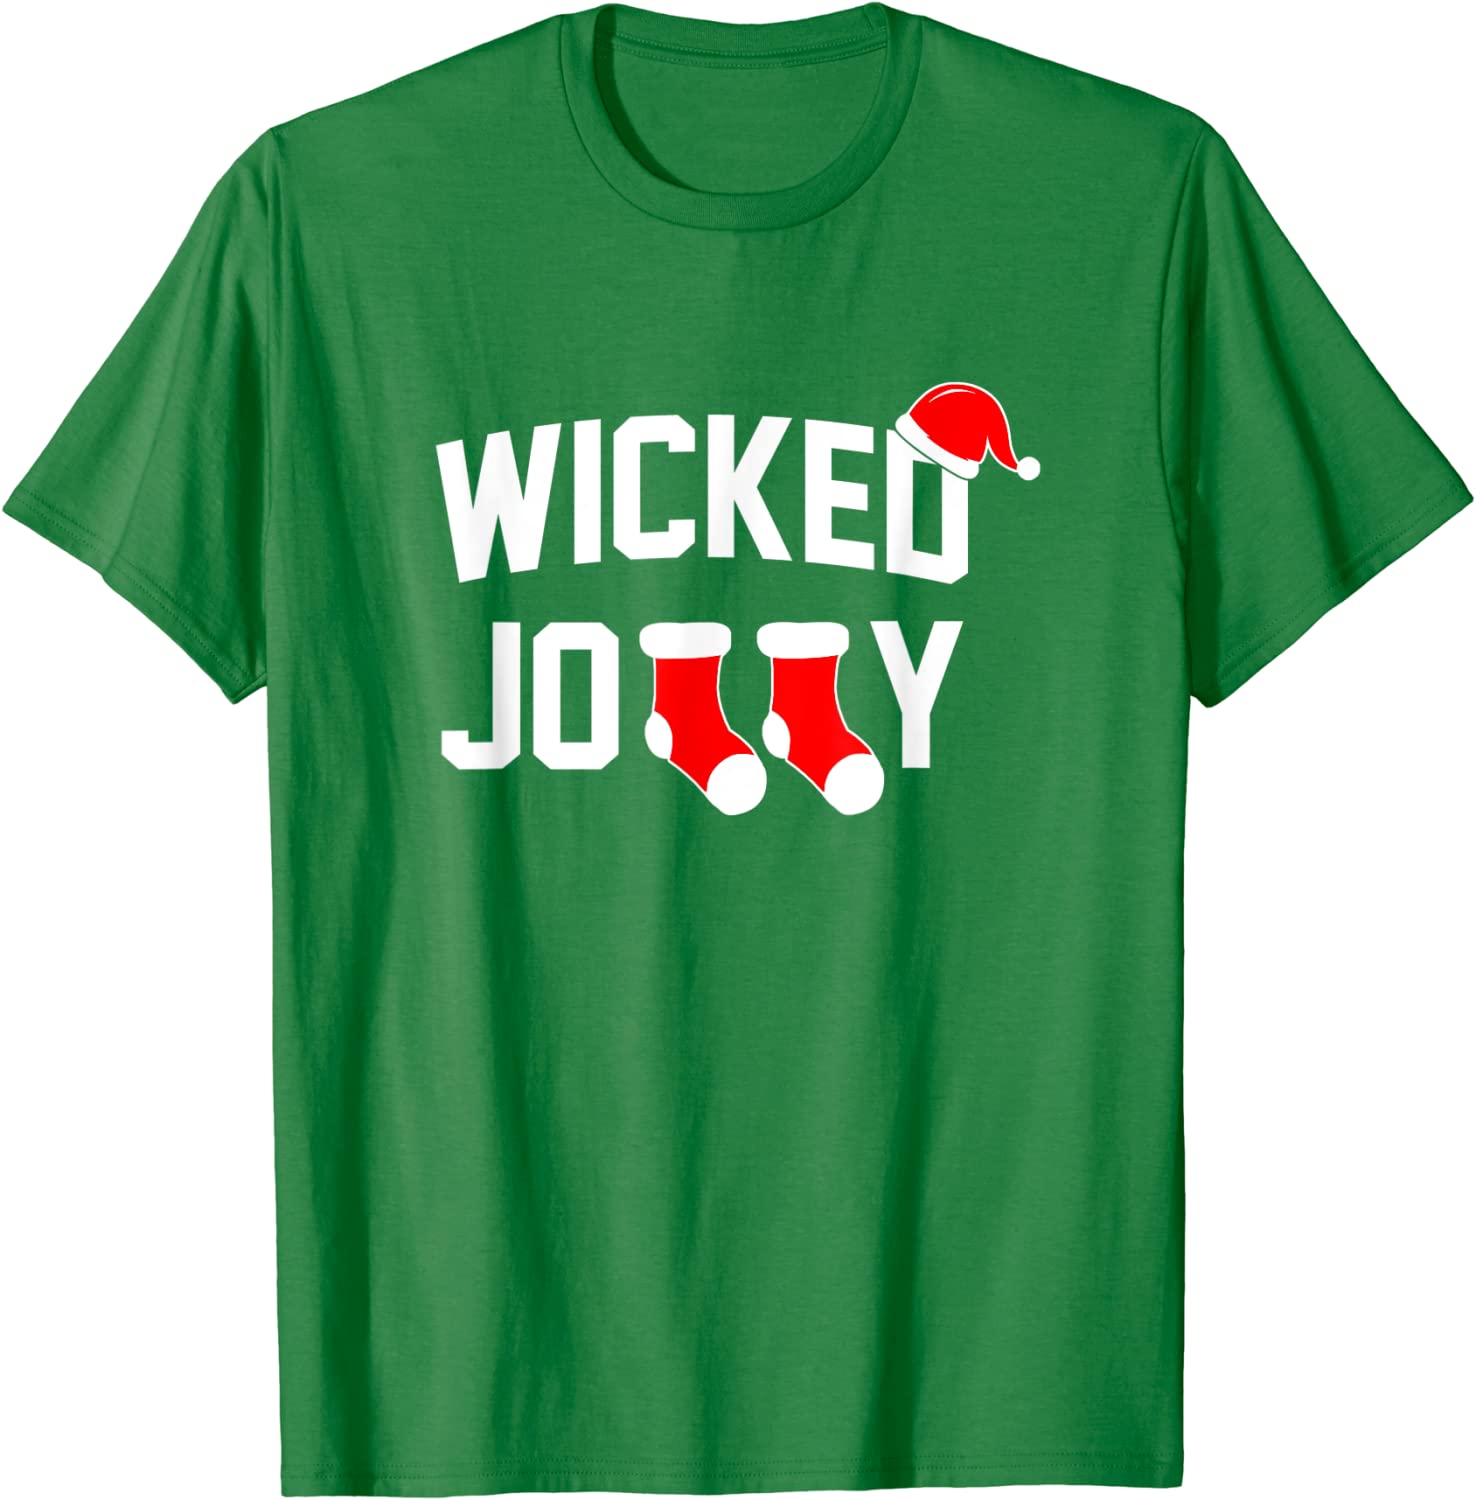 wicked jolly t-shrt